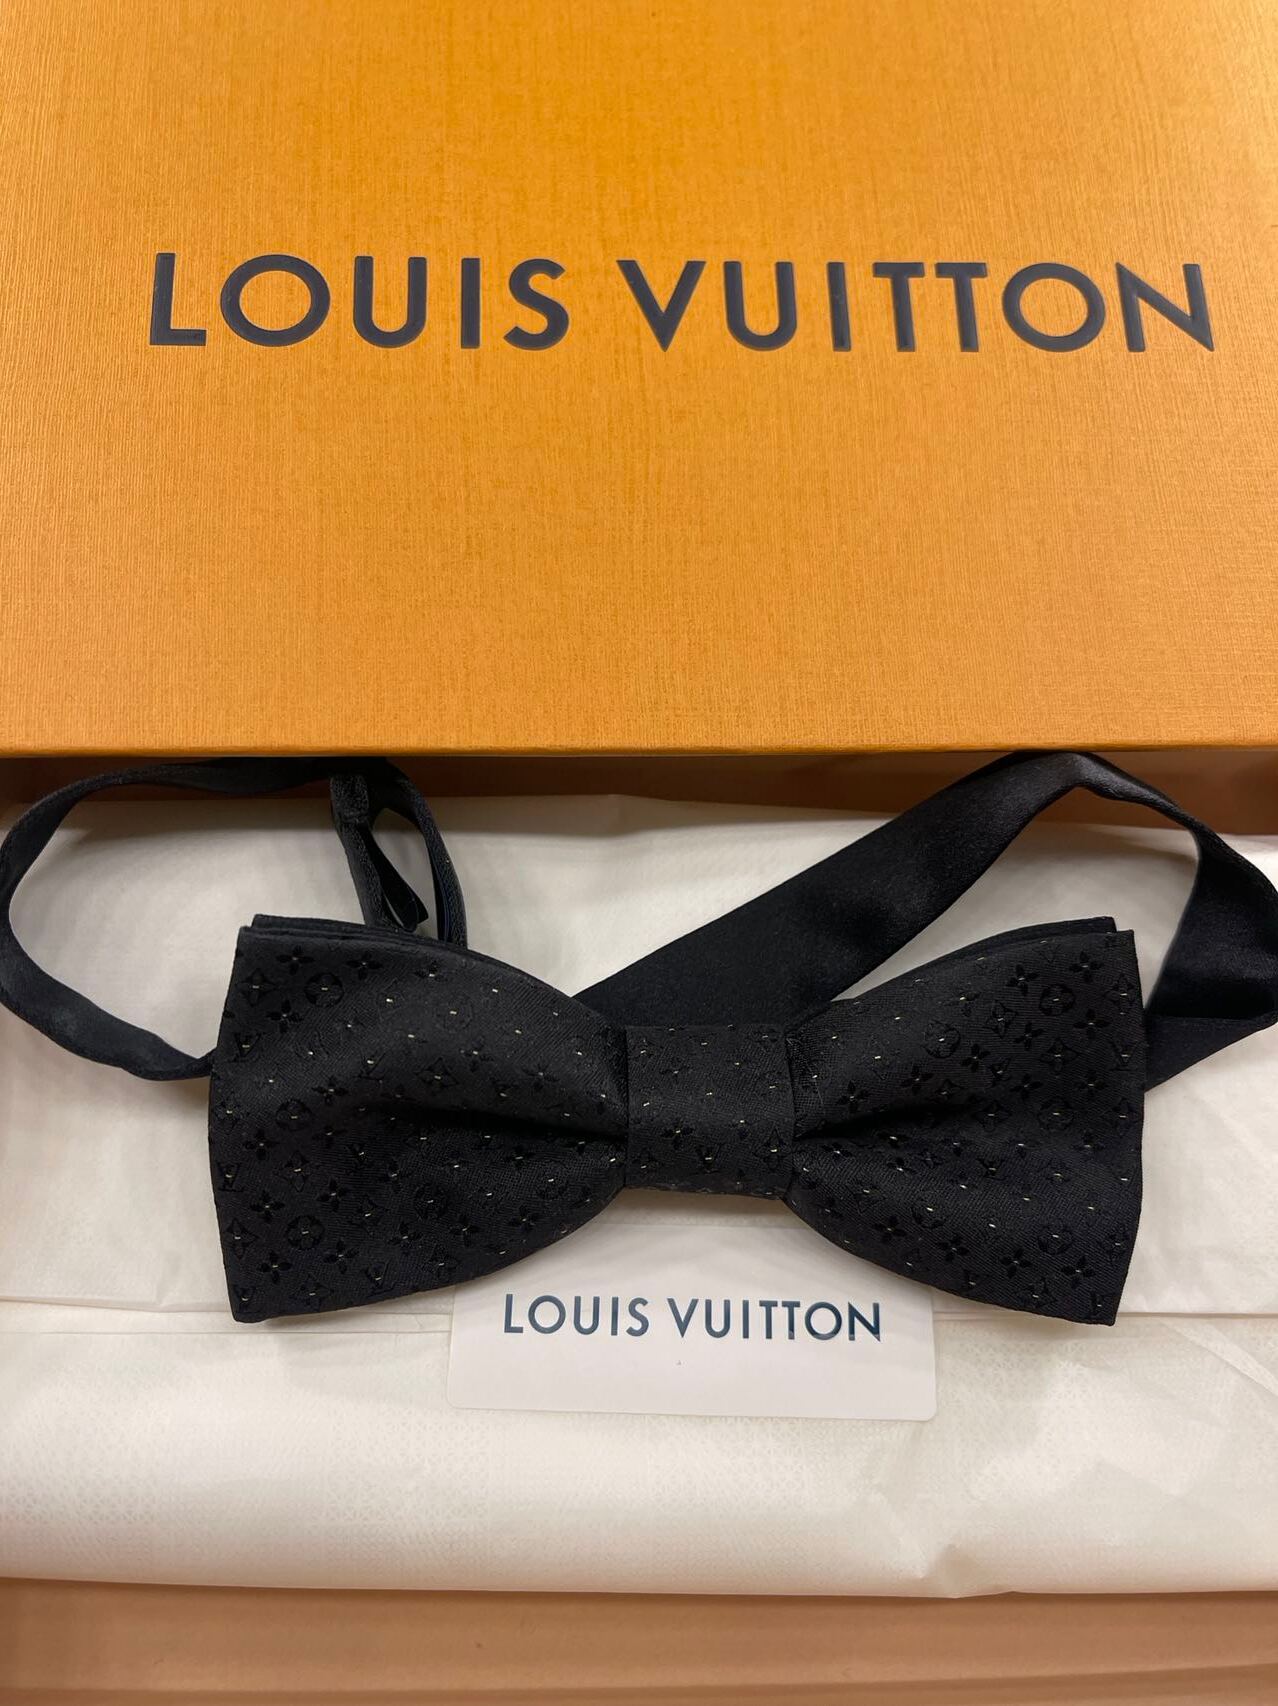 Shop Louis Vuitton MONOGRAM Monogram gold bowtie (M75295) by mizutamadot